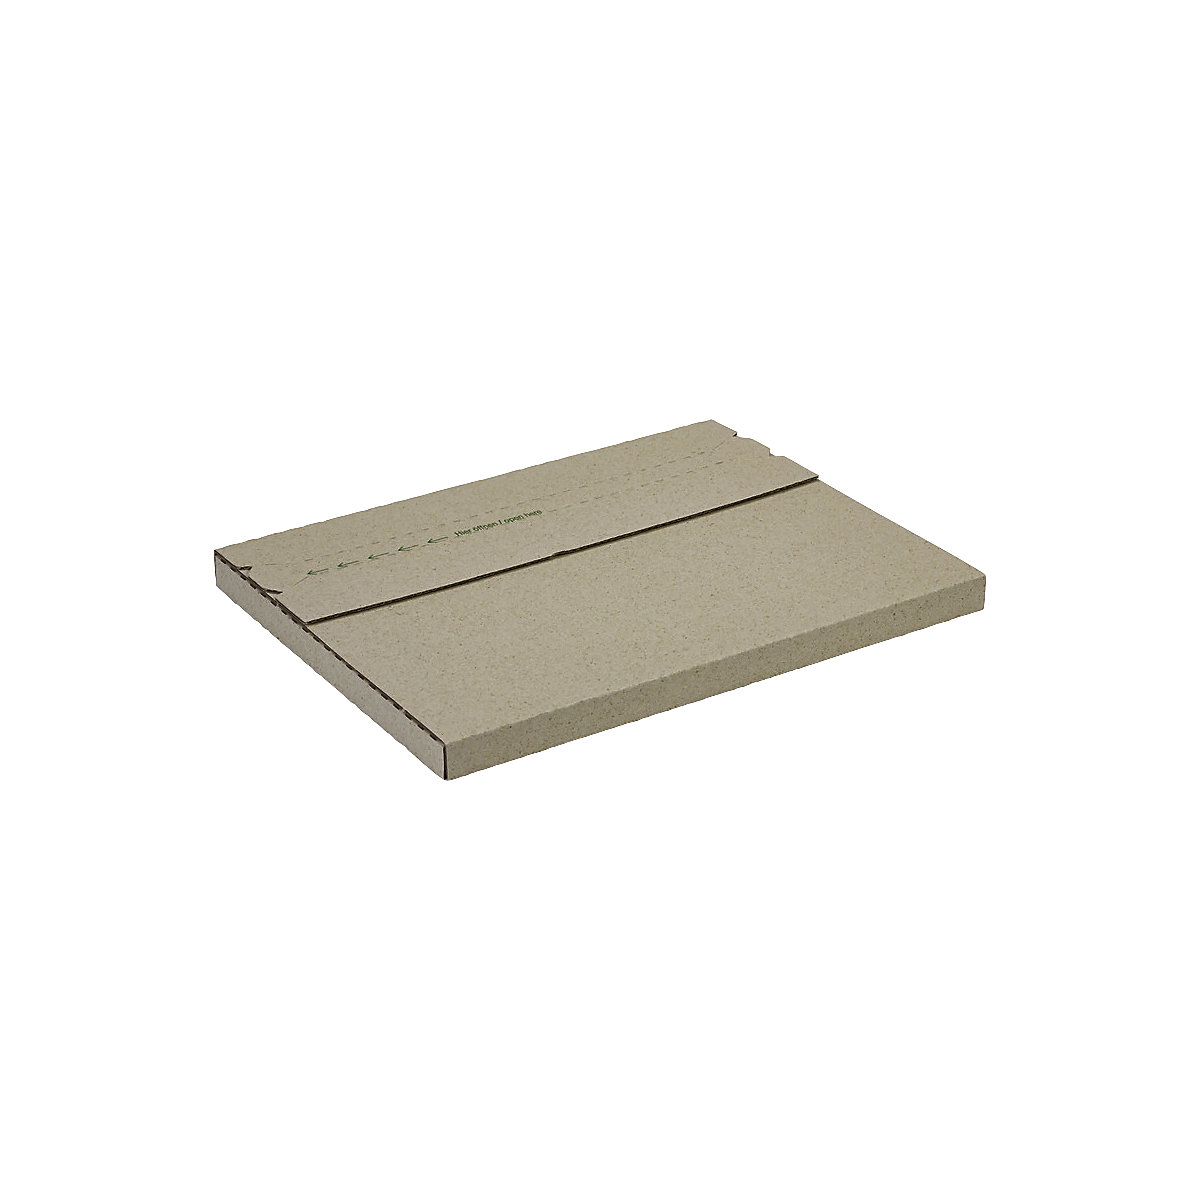 Graspapier-Flachpack terra, selbstklebend, Innen-LxBxH 257 x 207 x 13 mm, ab 150 Stk-2